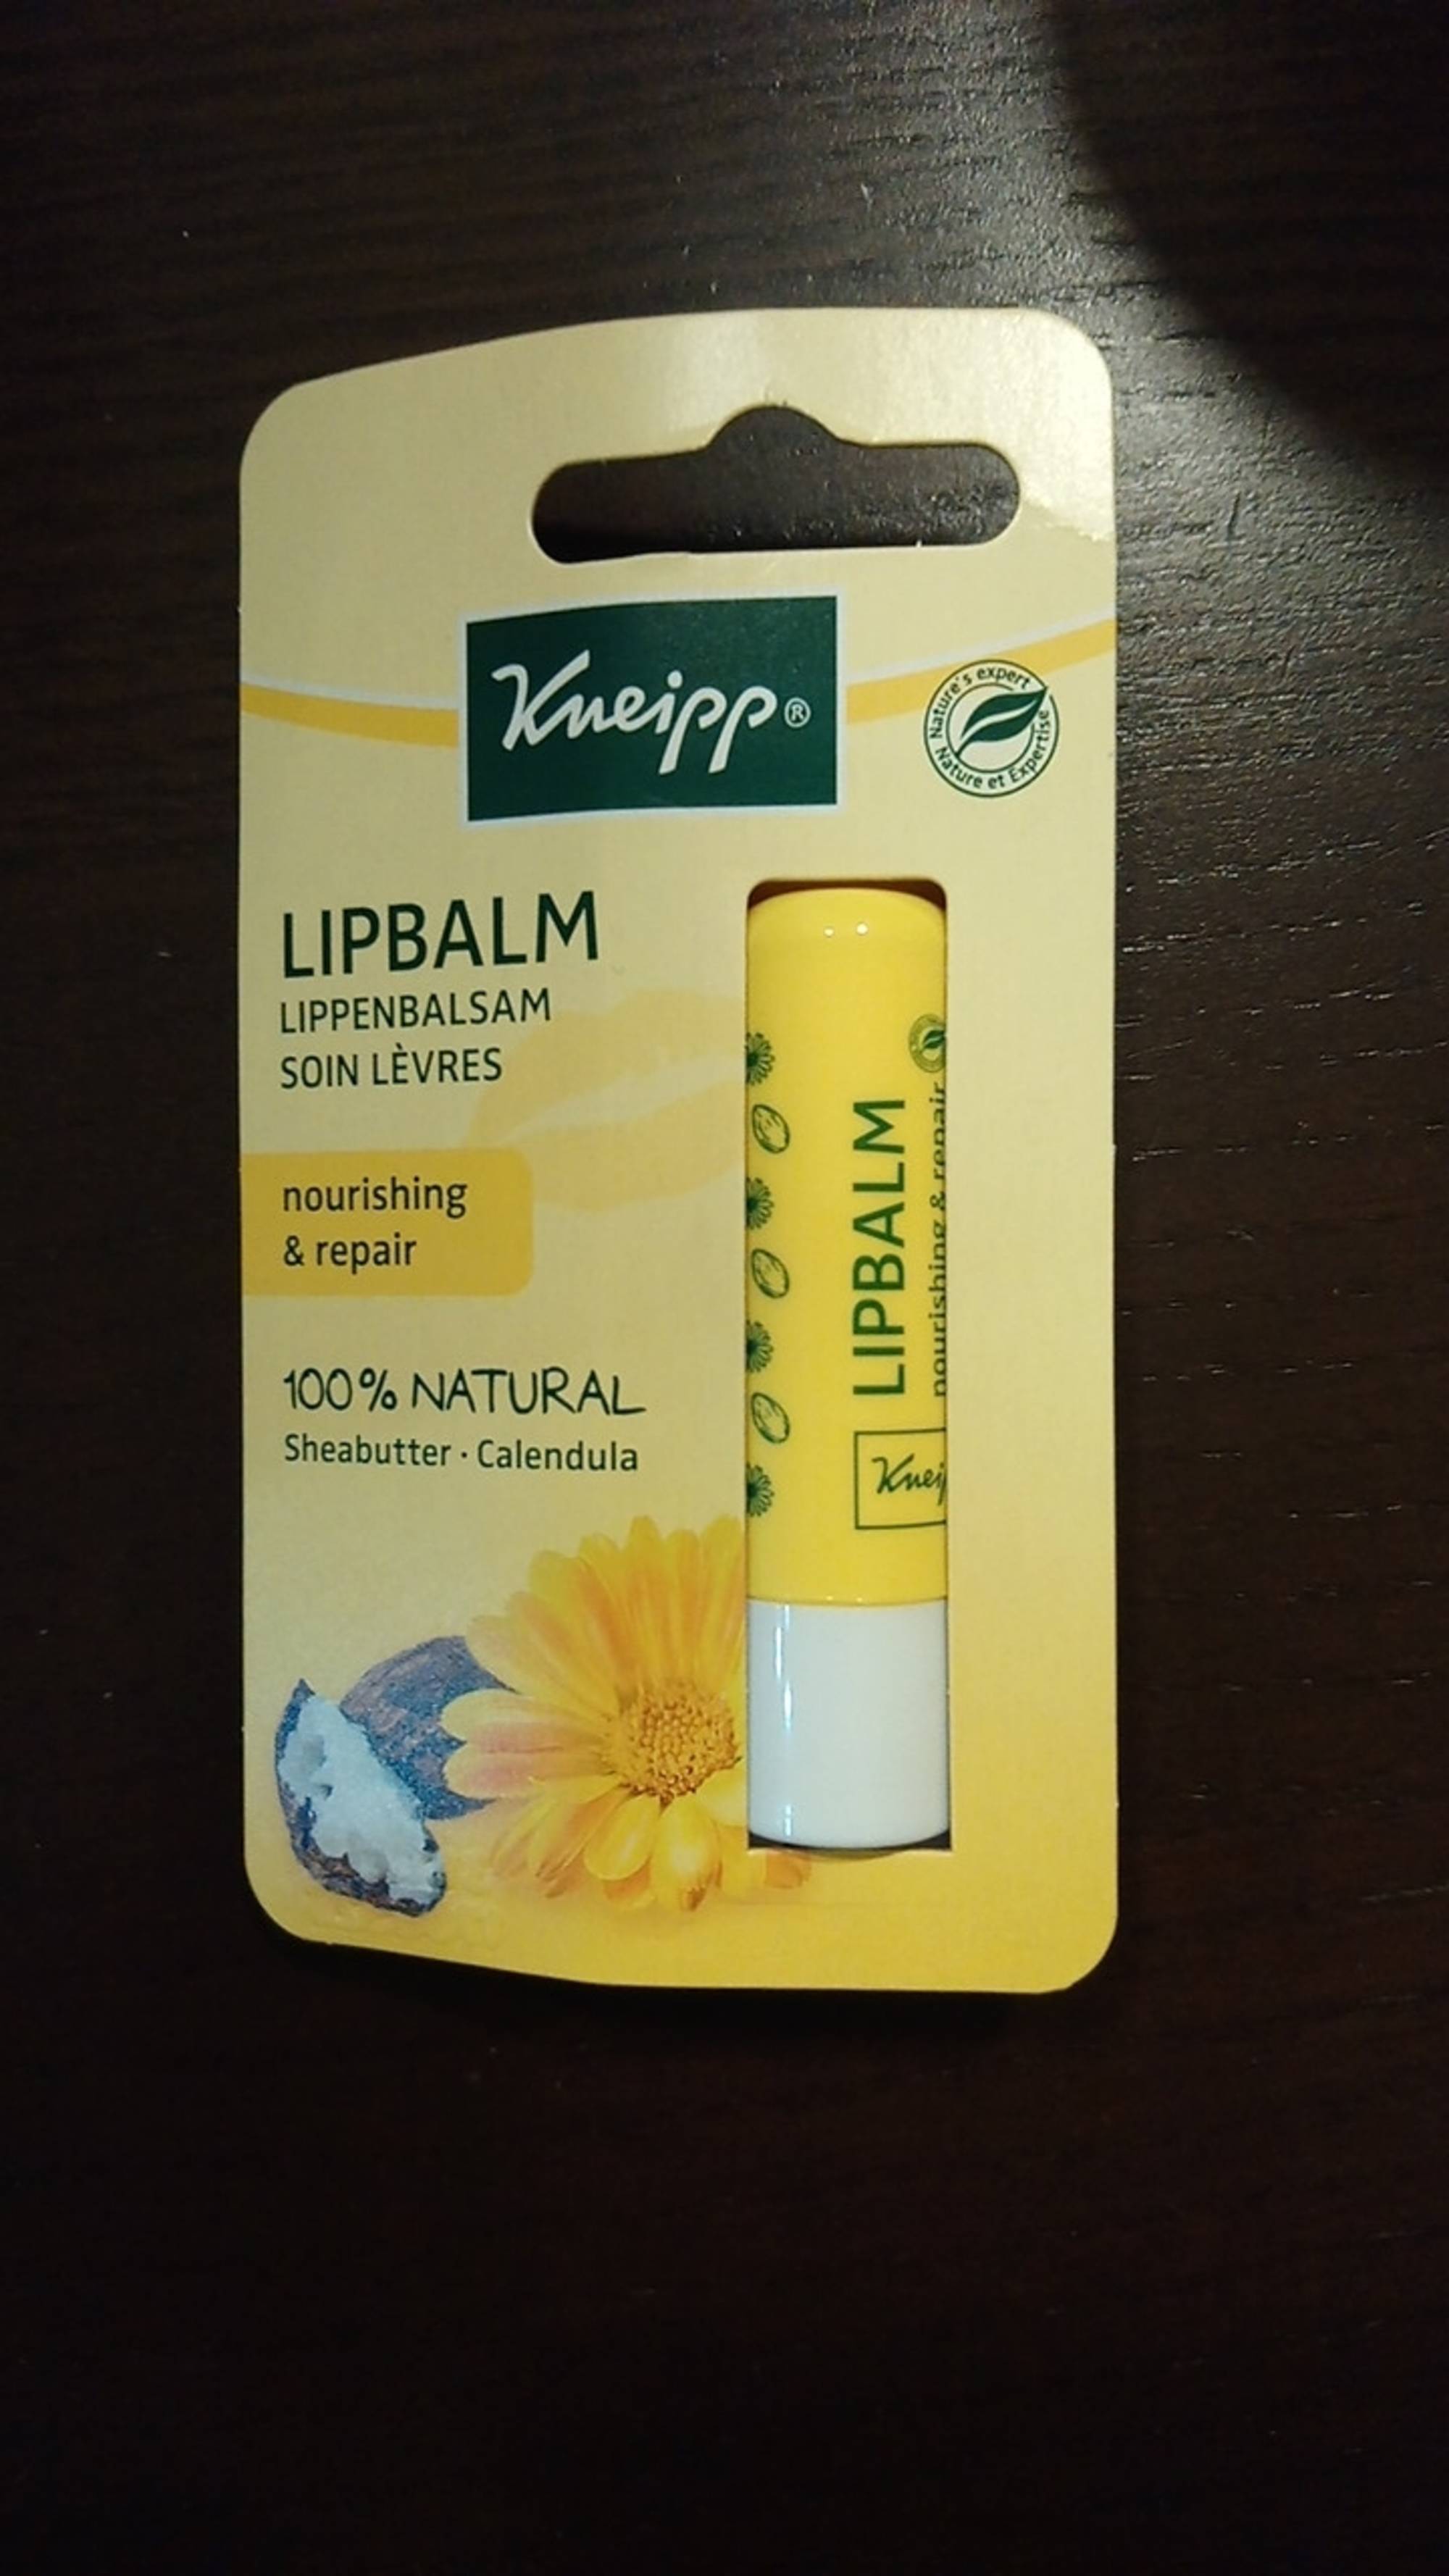 KNEIPP - Lipbalm - Lippenbalsam soin lèvres